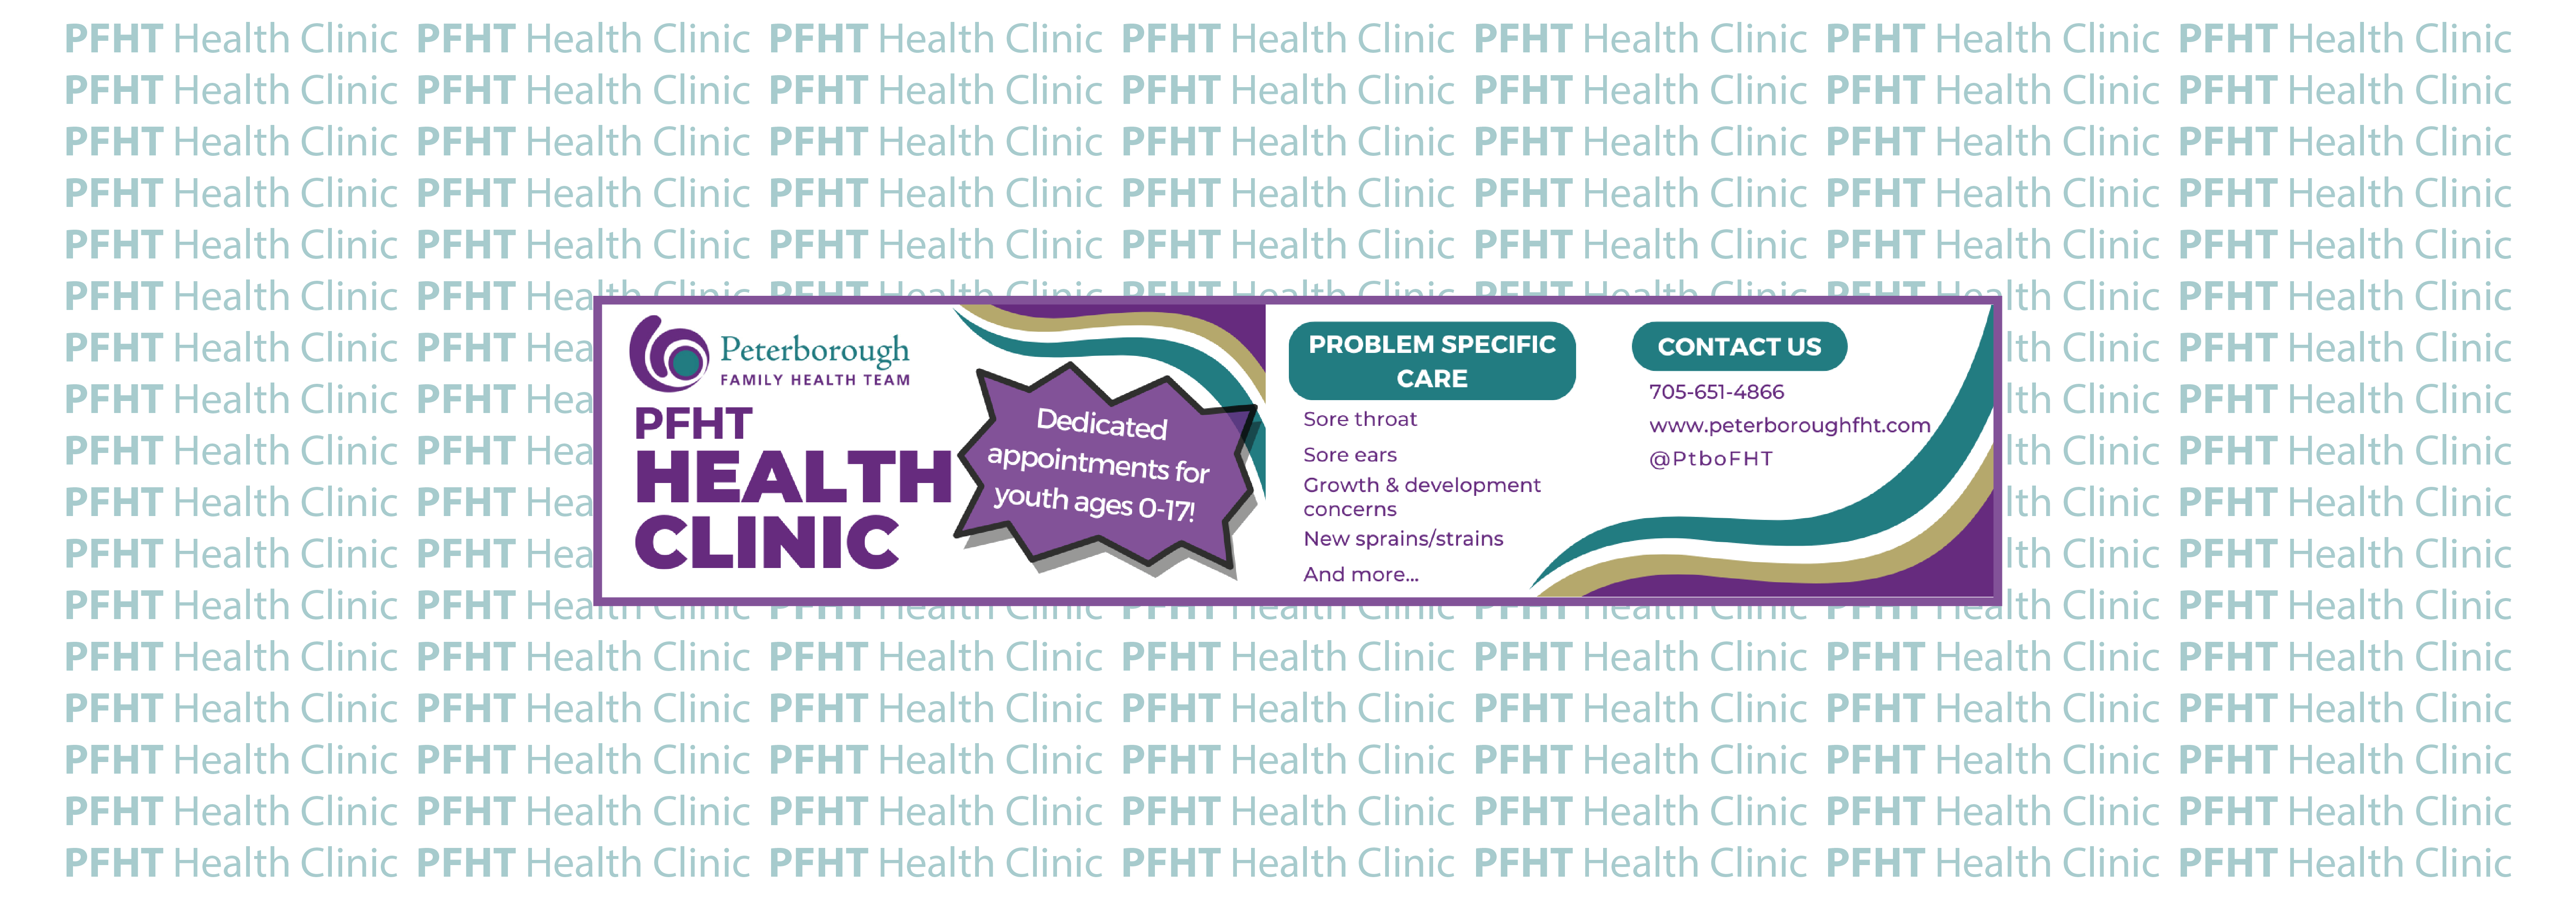 PFHT Health Clinic